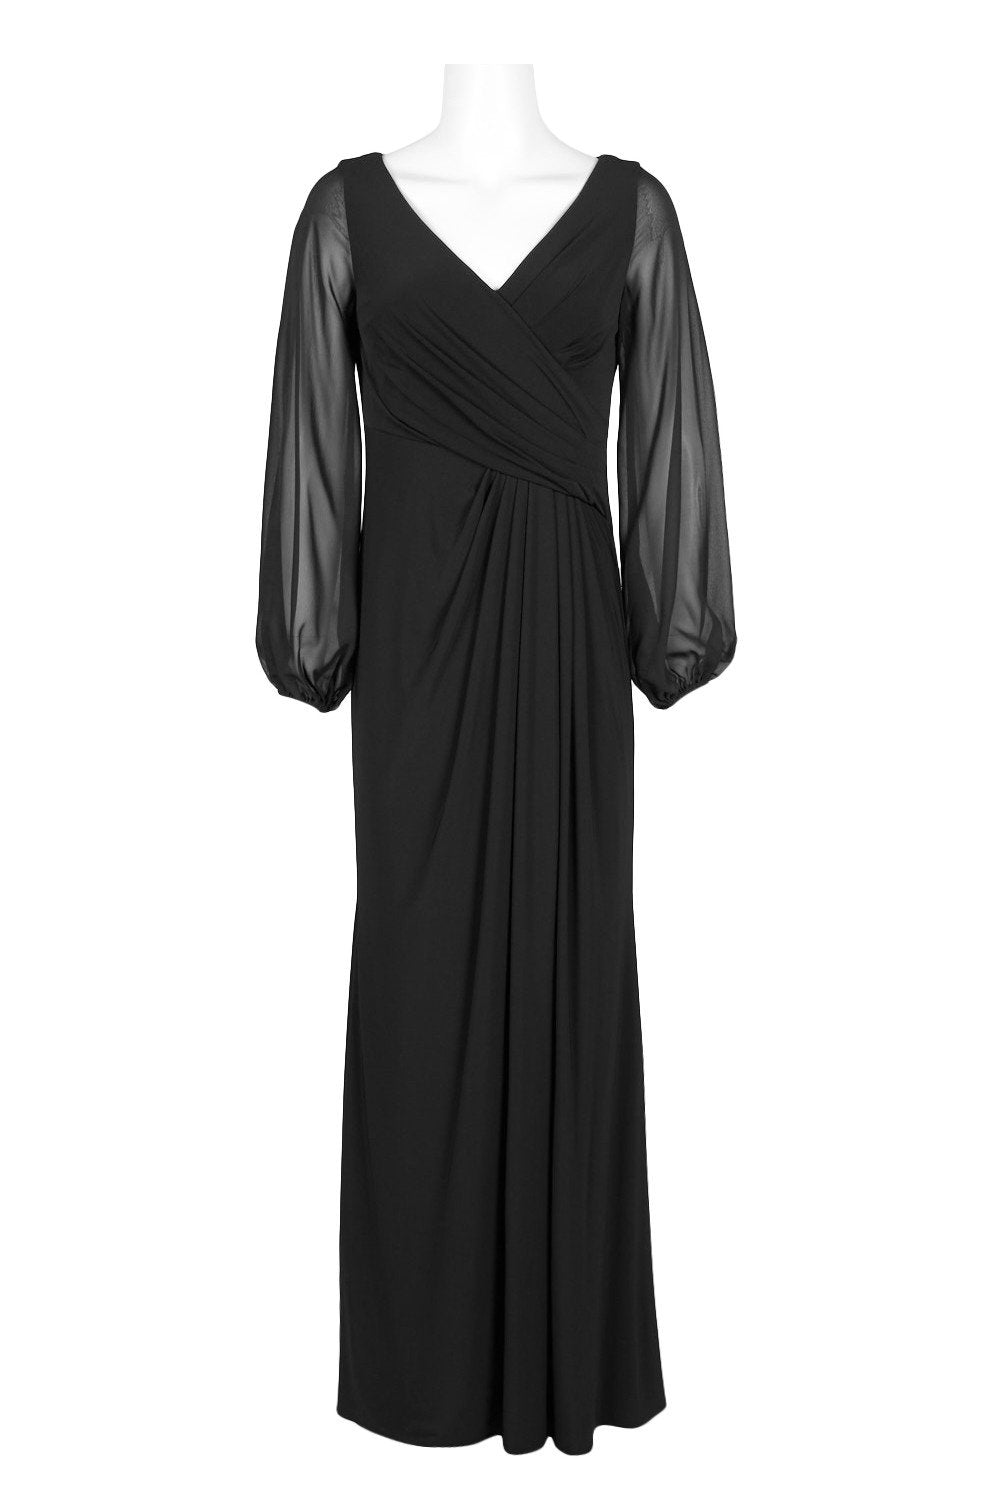 Adrianna Papell - AP1E205892 Long Sleeve V-neck Jersey Chiffon Dress In Black